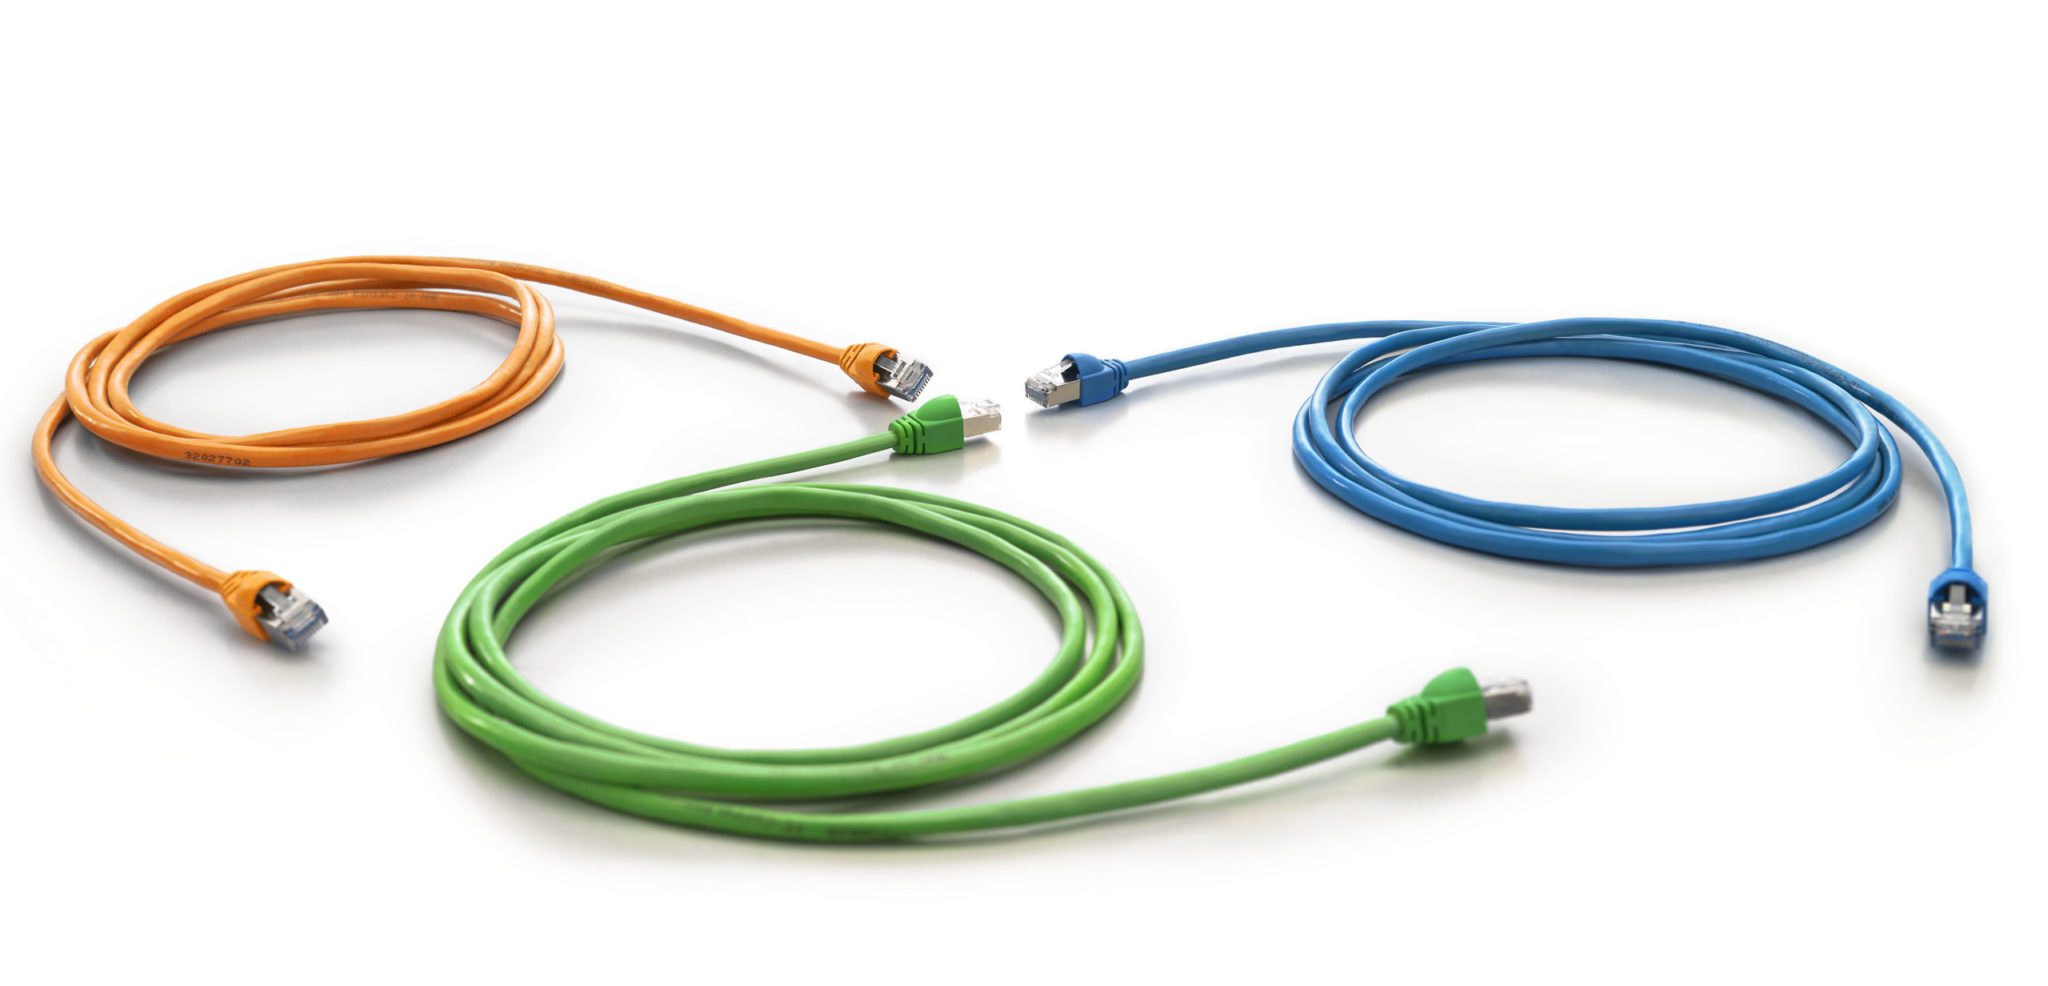 Weidmuller RJ45 smart metering cables